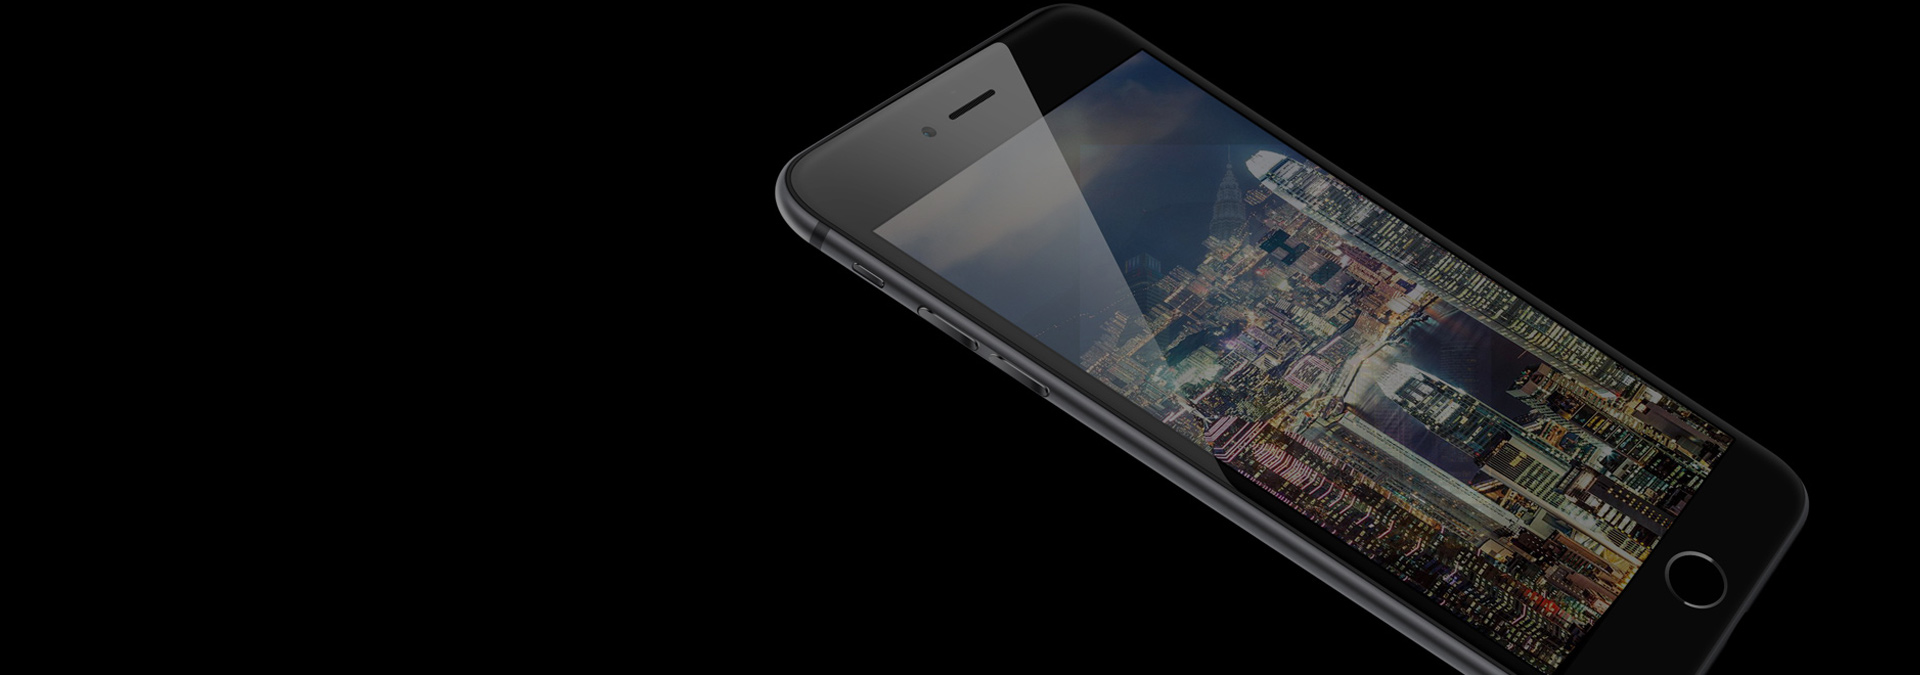 iphone-screen-cityscape